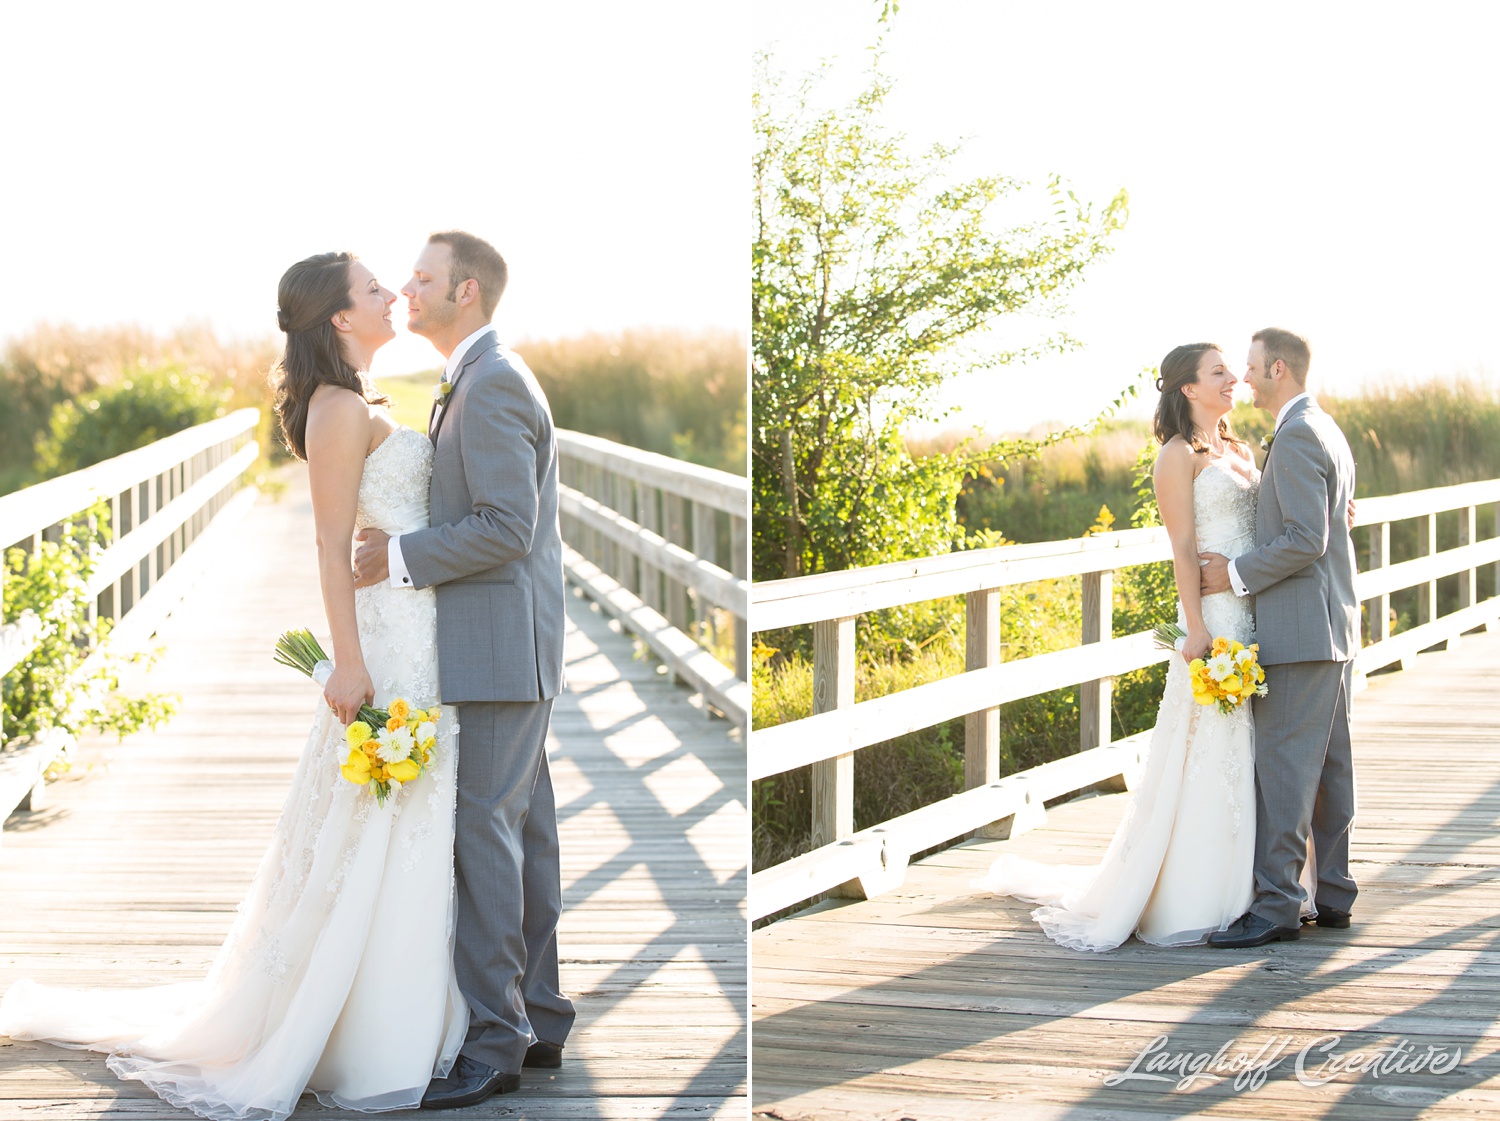 WeddingPhotography-WisconsinWedding-StrawberryCreek-LanghoffCreative-Brumm17-photo.jpg